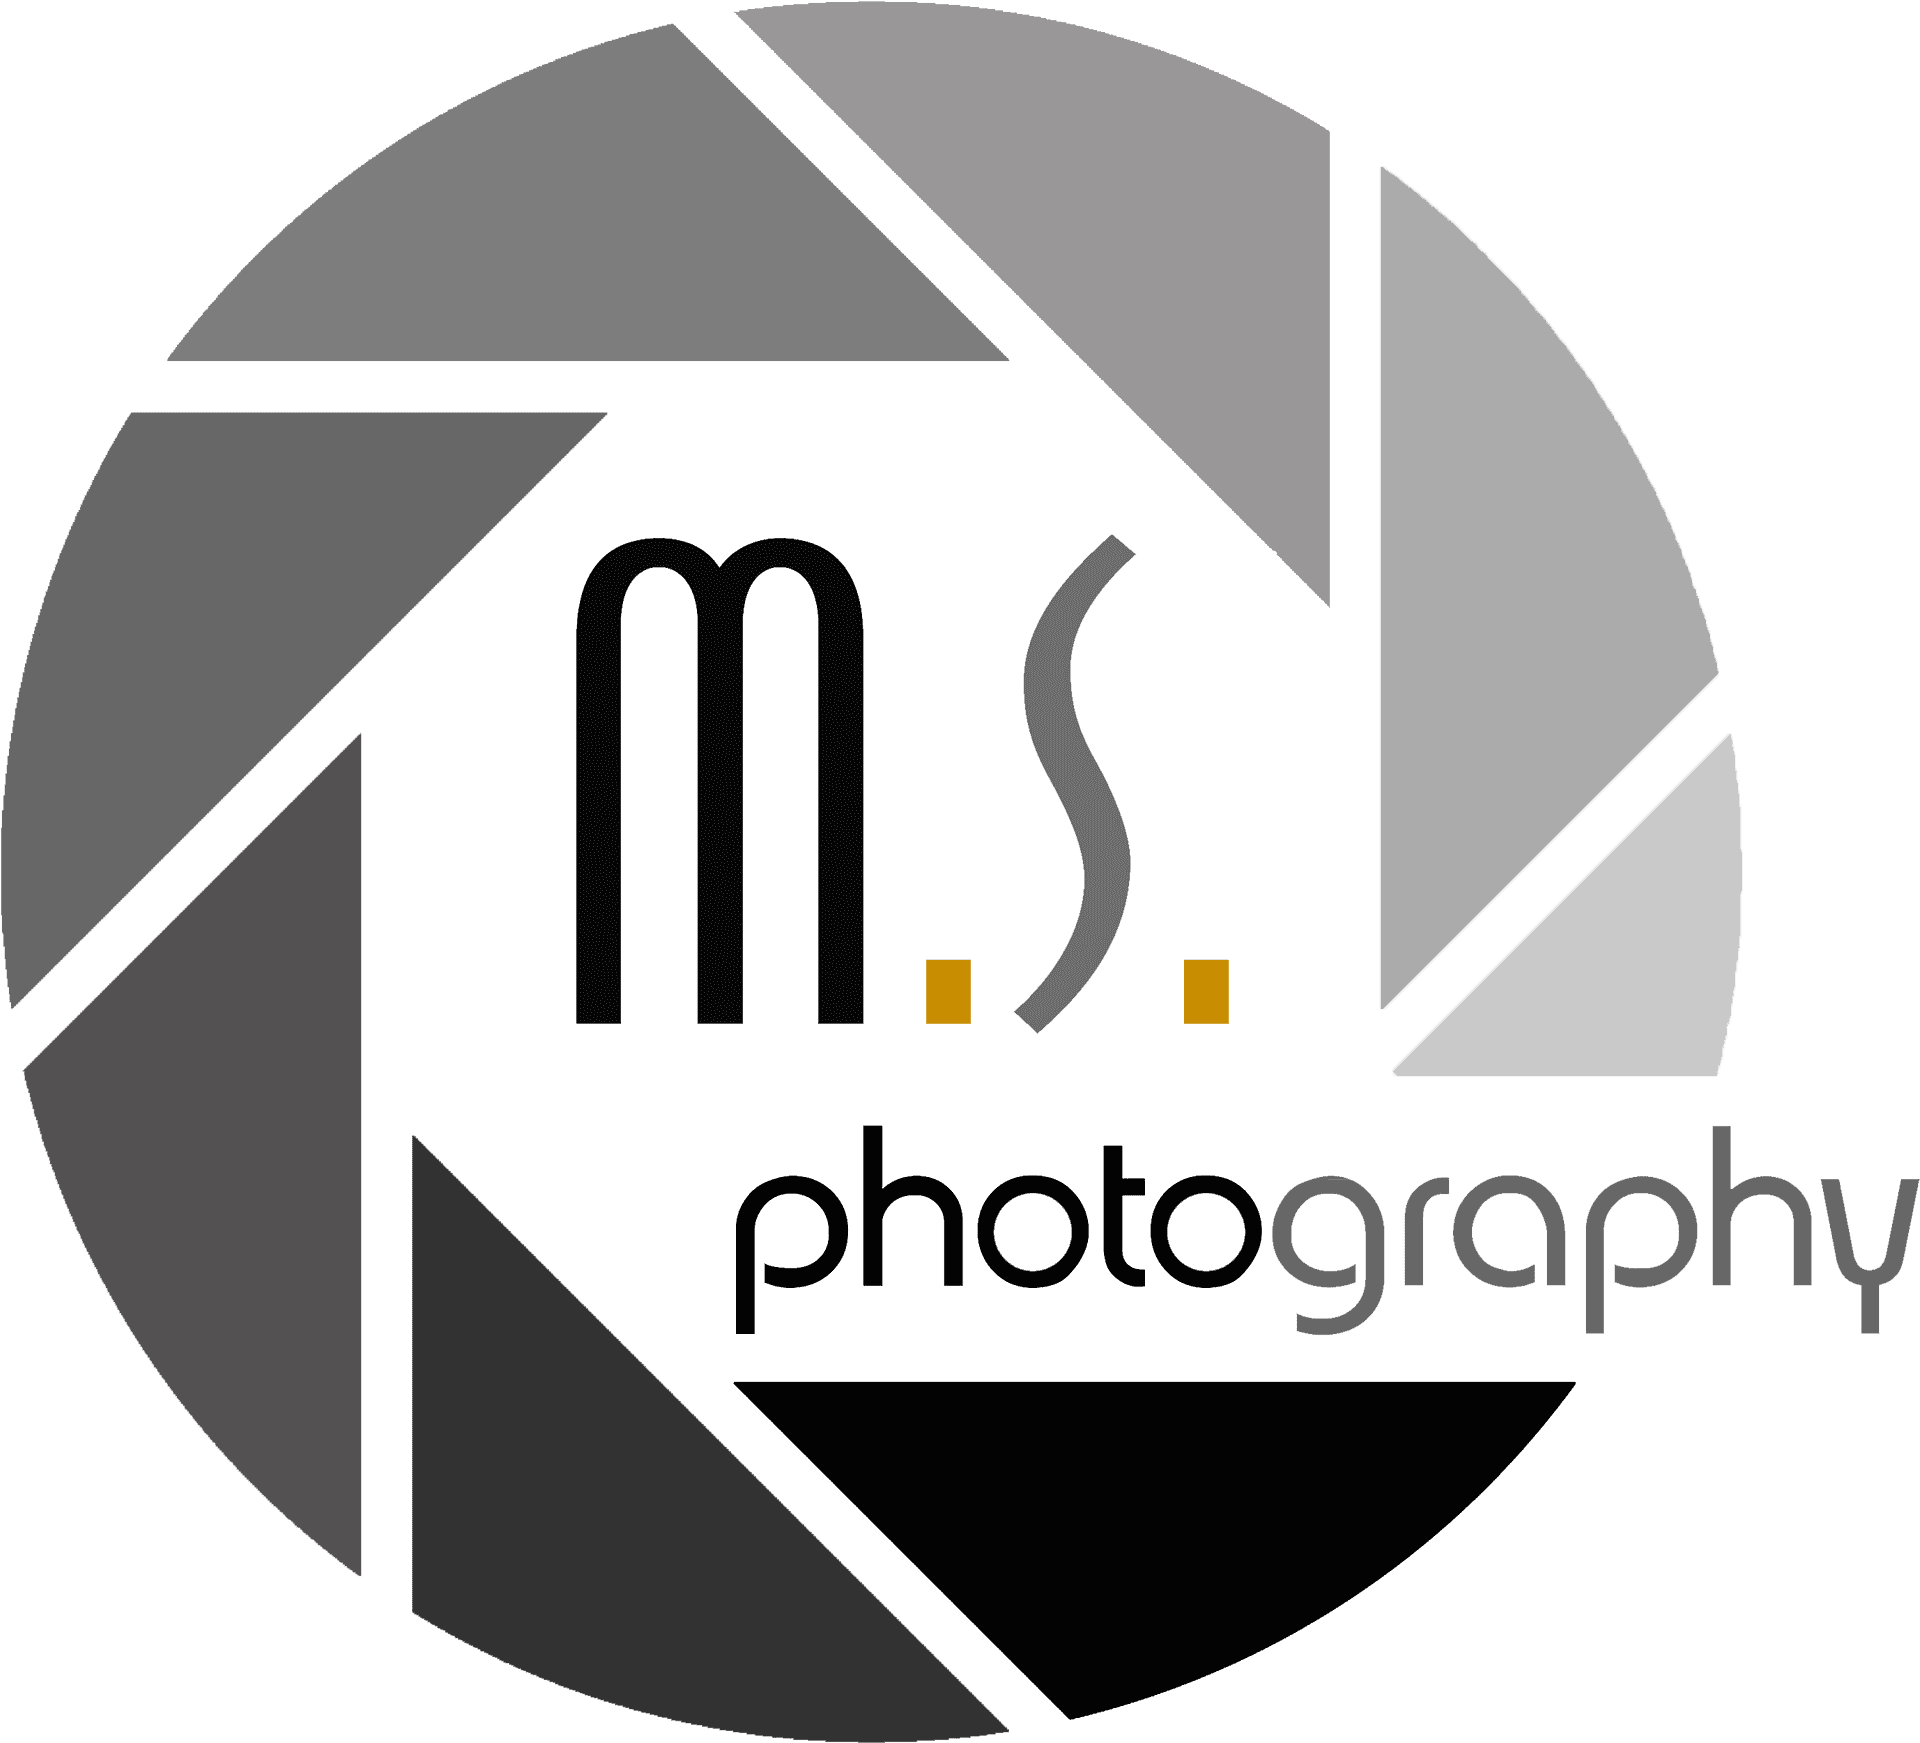 Modern Photography Logo Design PNG image